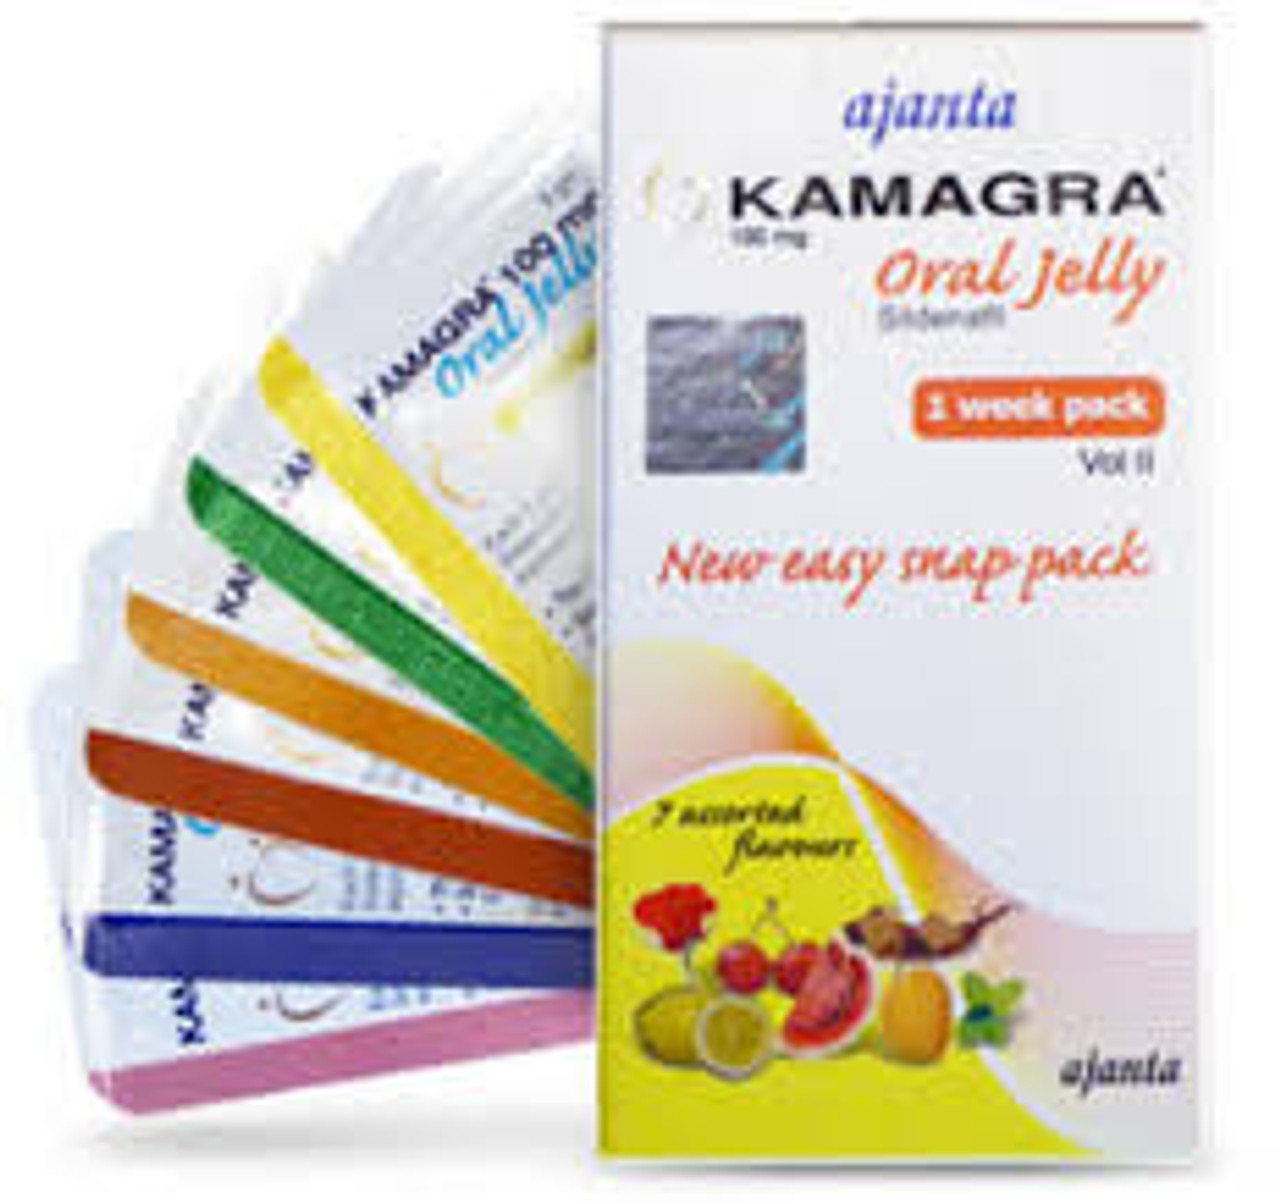 Kamagra Oral Jelly Volu I Sildenafil 100 mg at Rs 300/pack